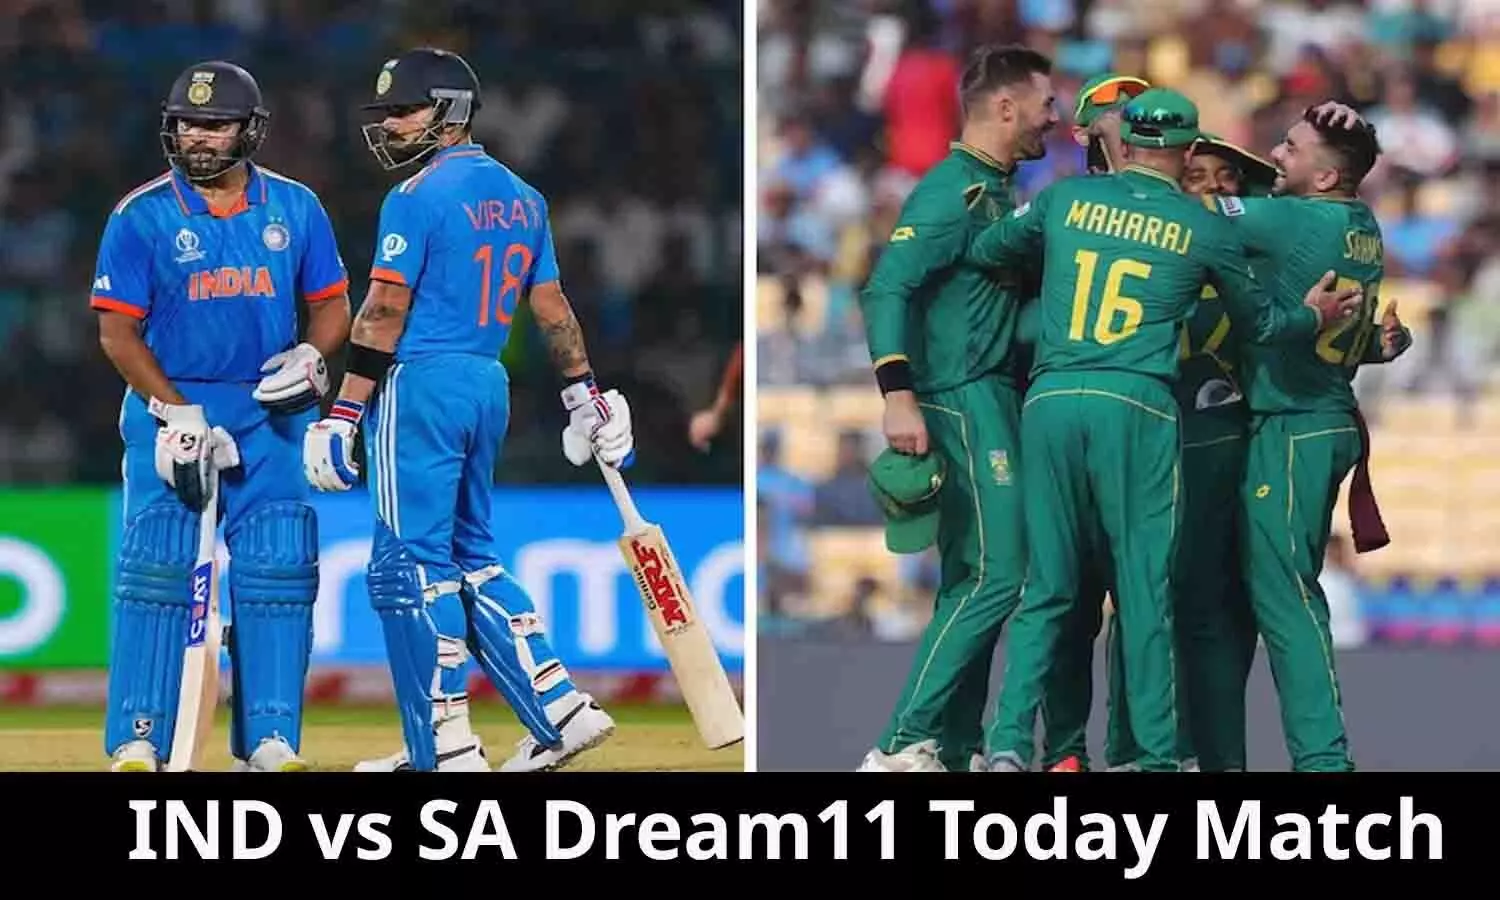 IND vs SA Dream11 Today Match